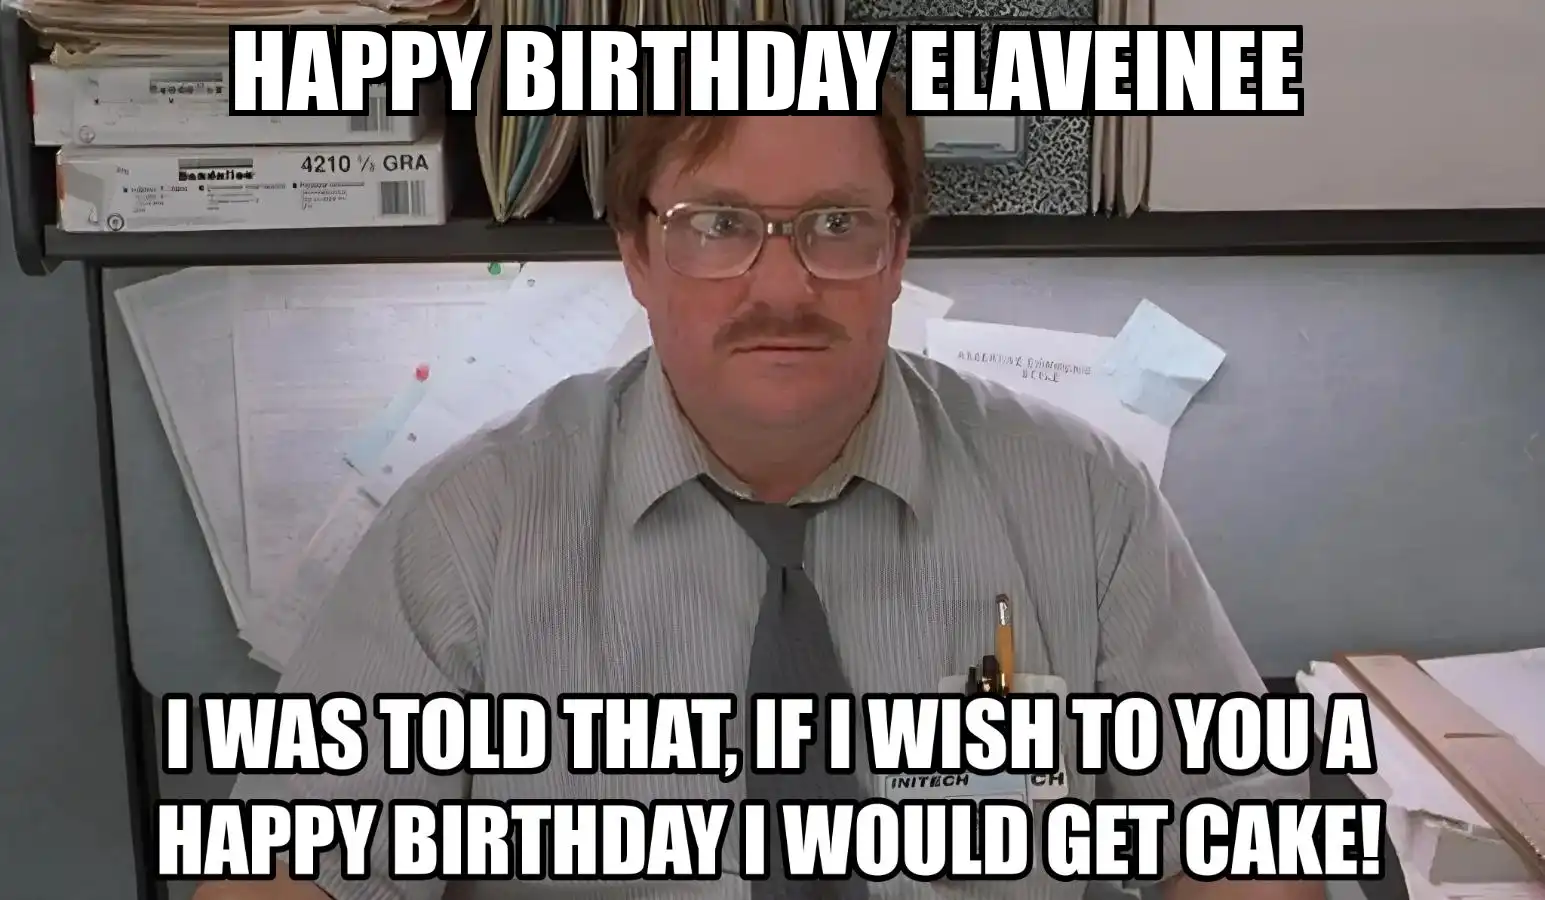 Happy Birthday Elaveinee I Would Get A Cake Meme